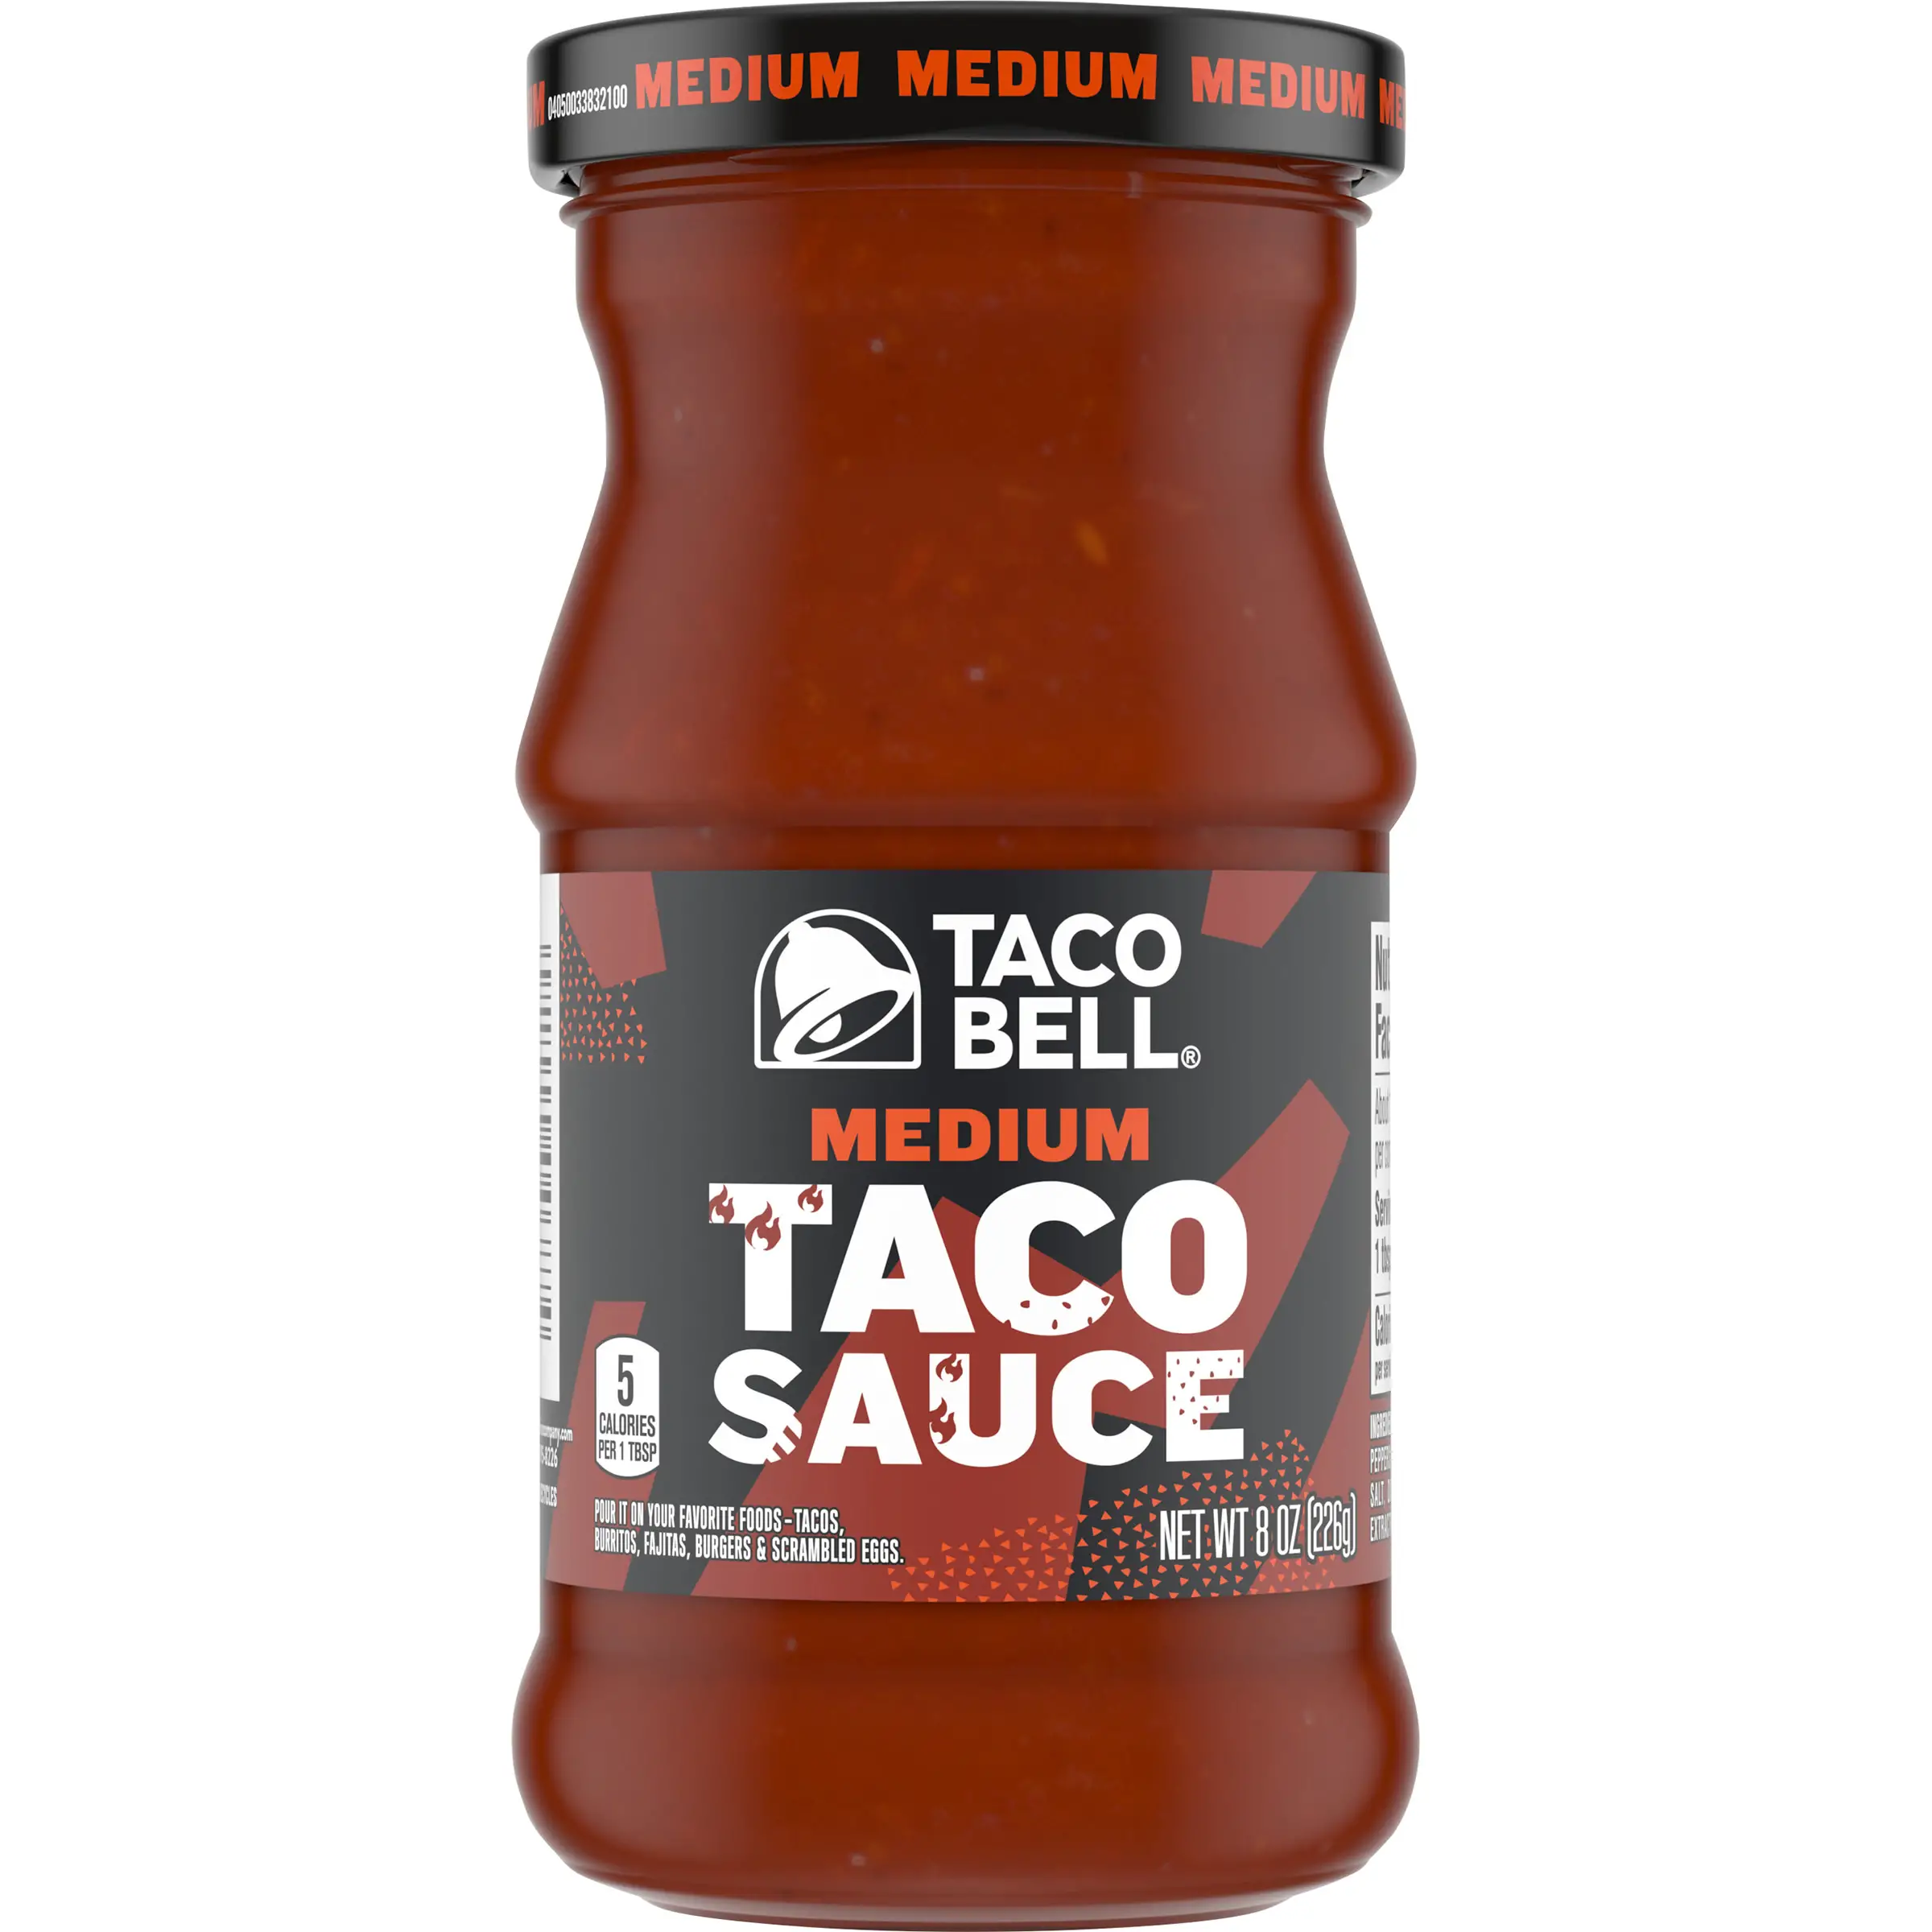 Taco Bell Medium Taco Sauce, 8 oz Bottle